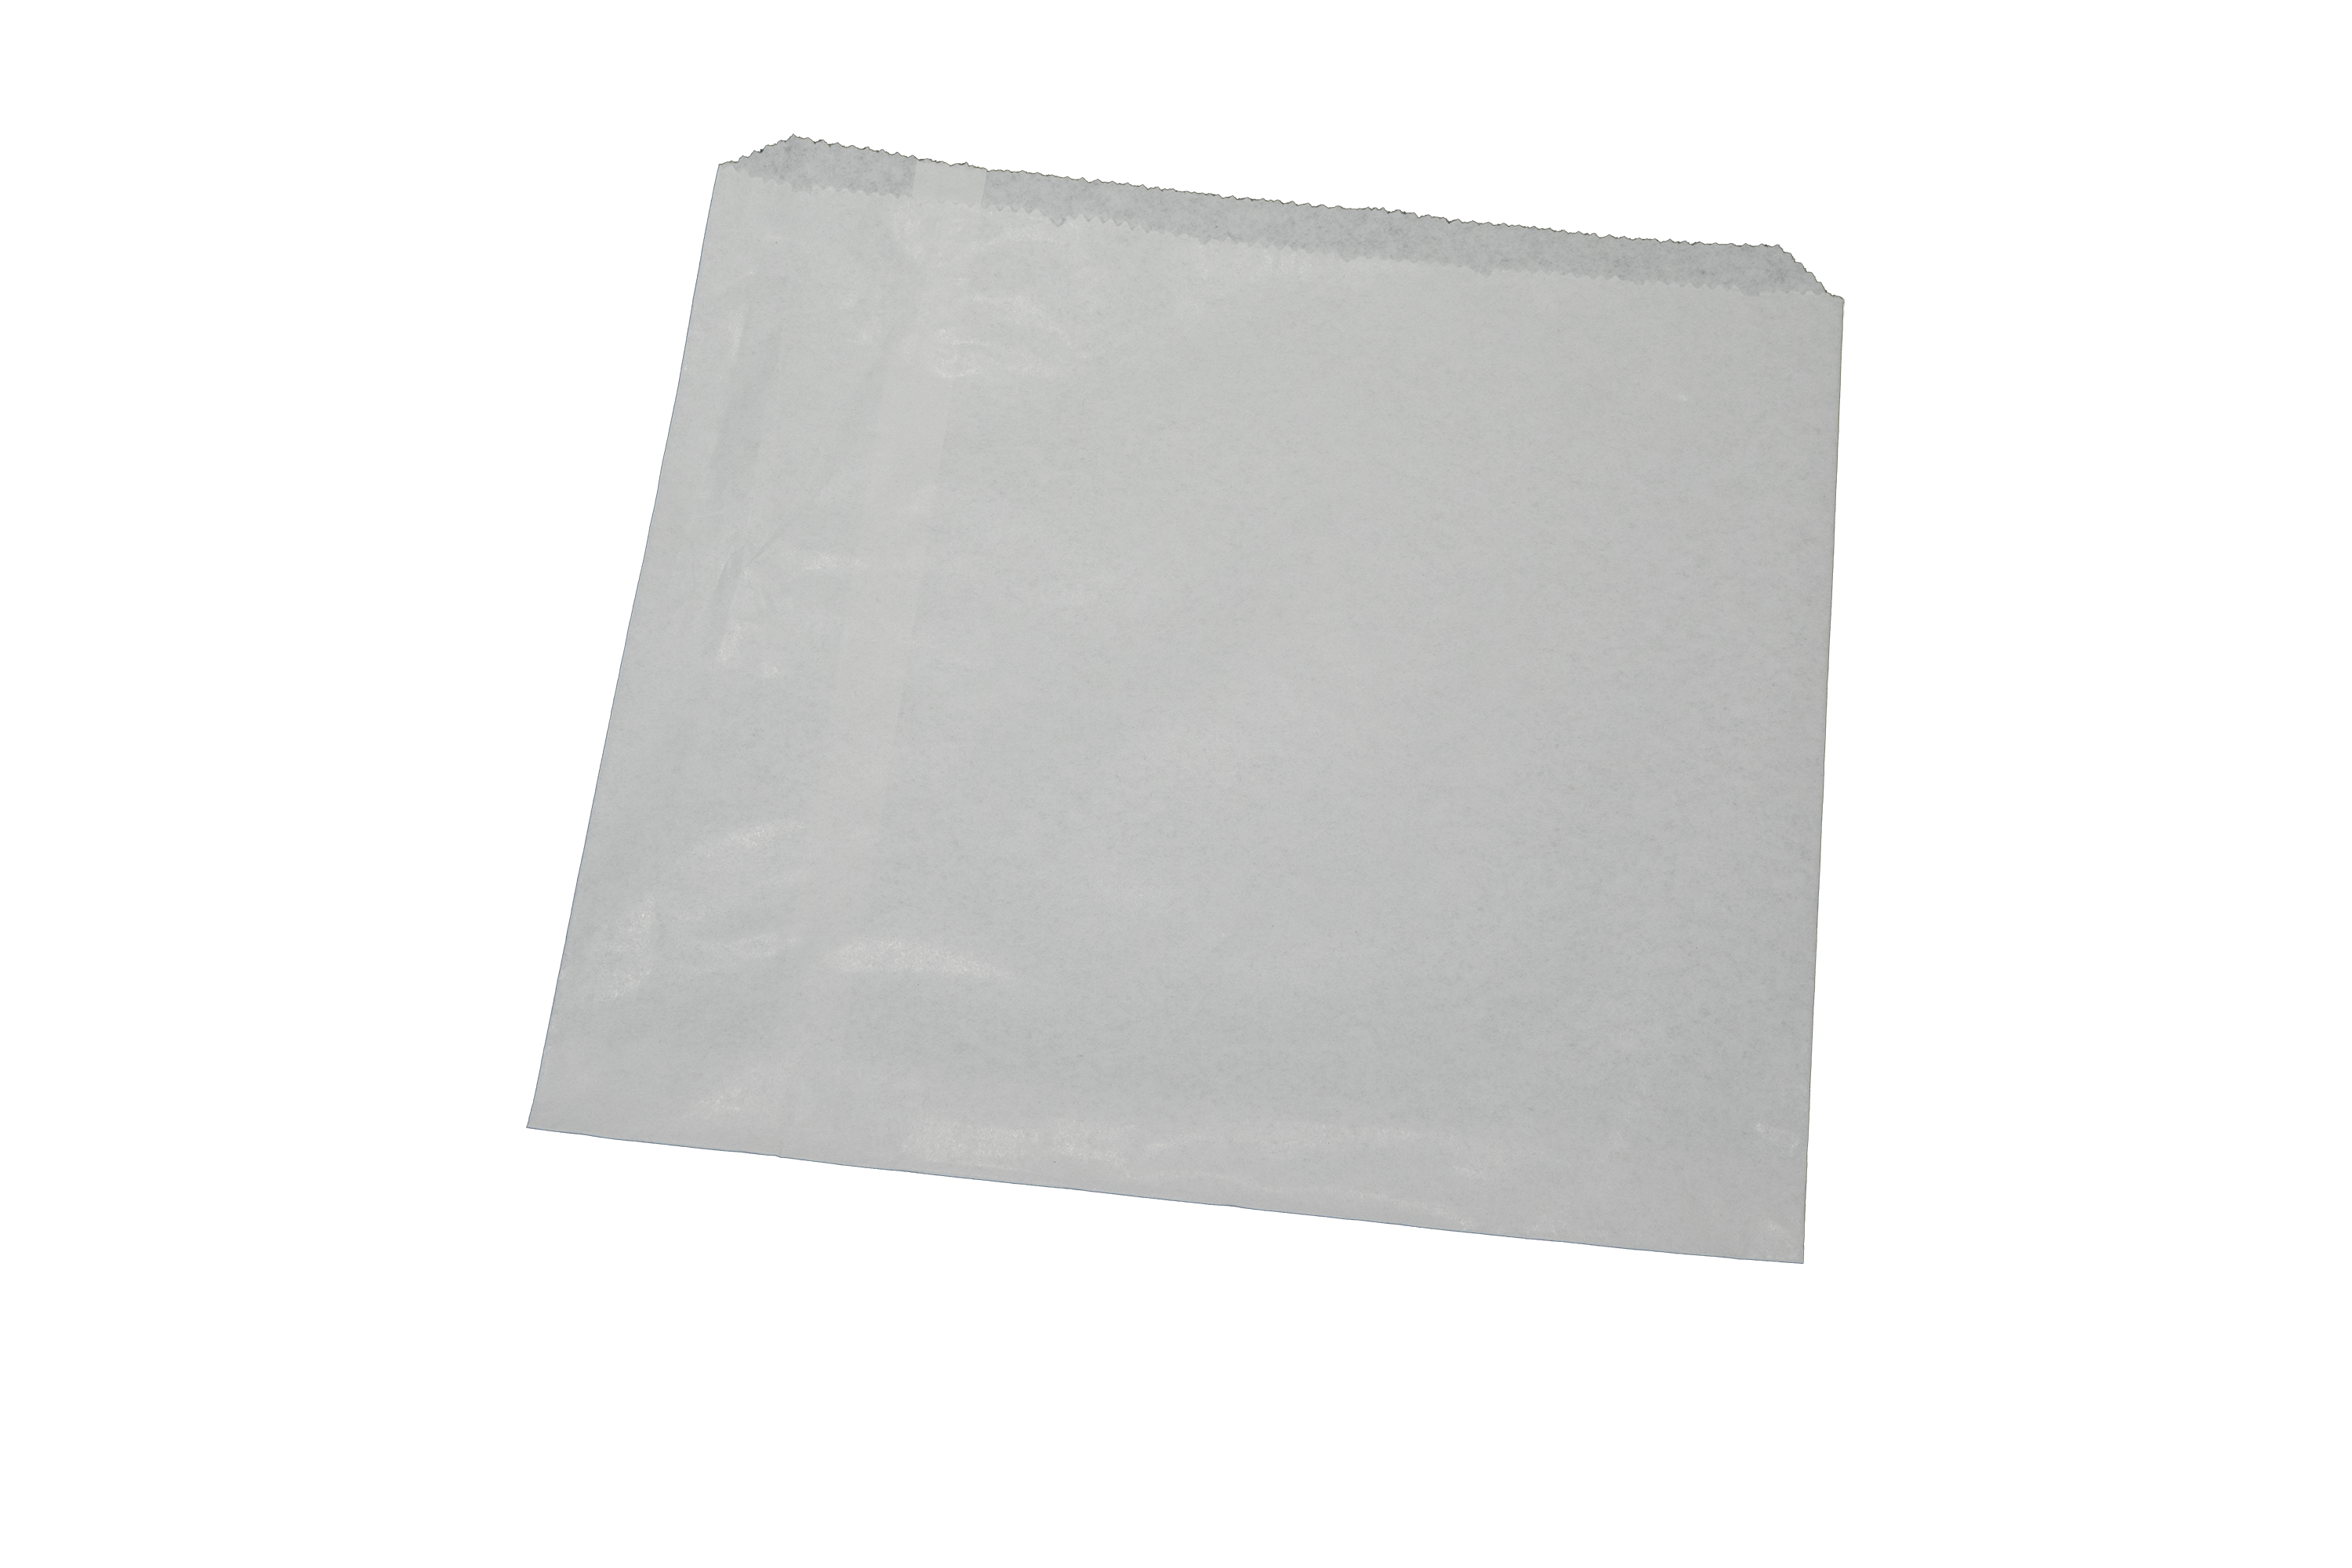 White Sulphite Paper Bags 7 x 7, PAPER BAGS